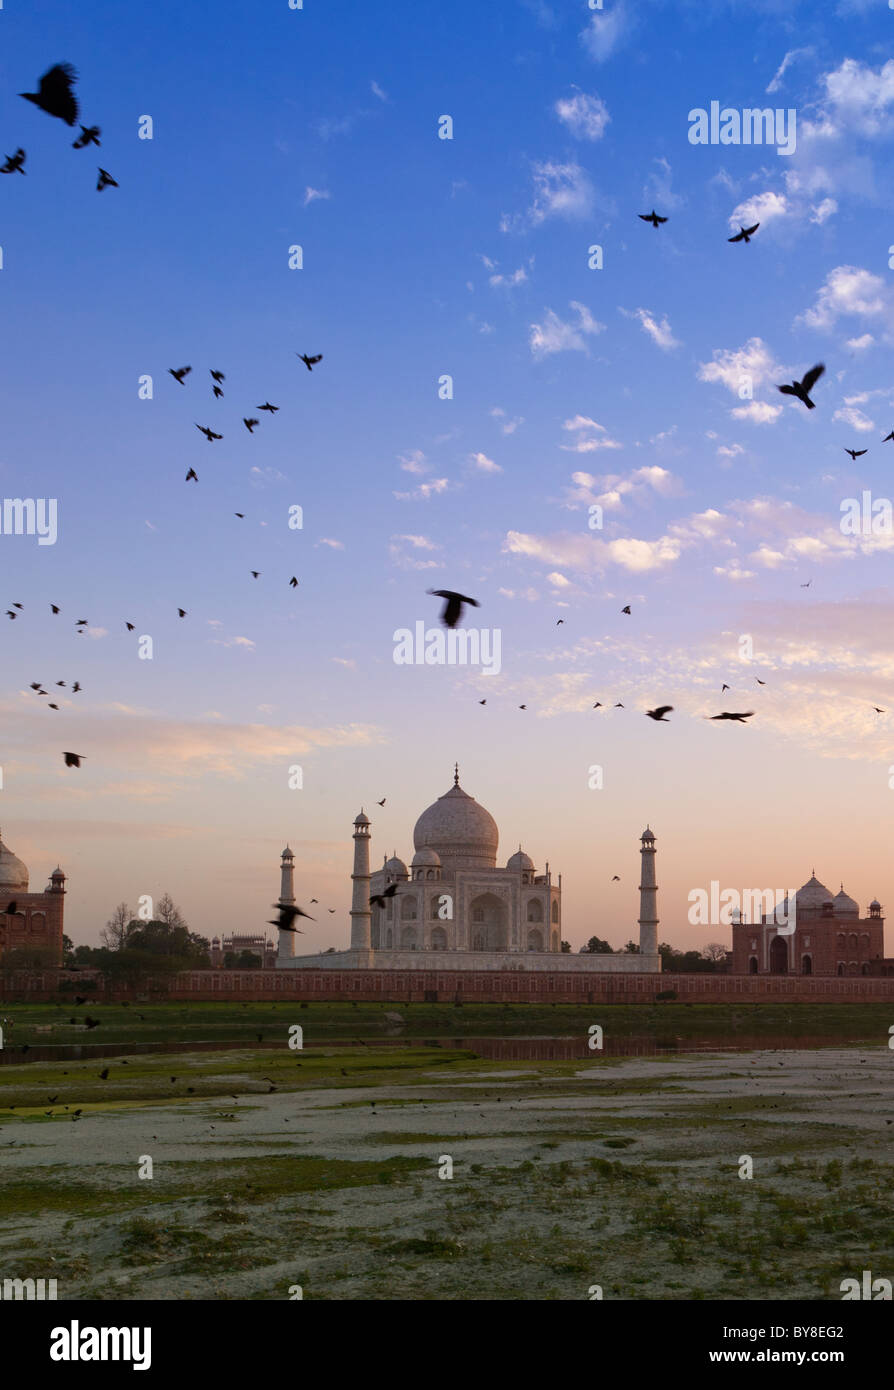 India, Uttar Pradesh, Agra, view over Yamuna riverbed towards Taj Mahal in late evening light with birds circling overhead Stock Photo